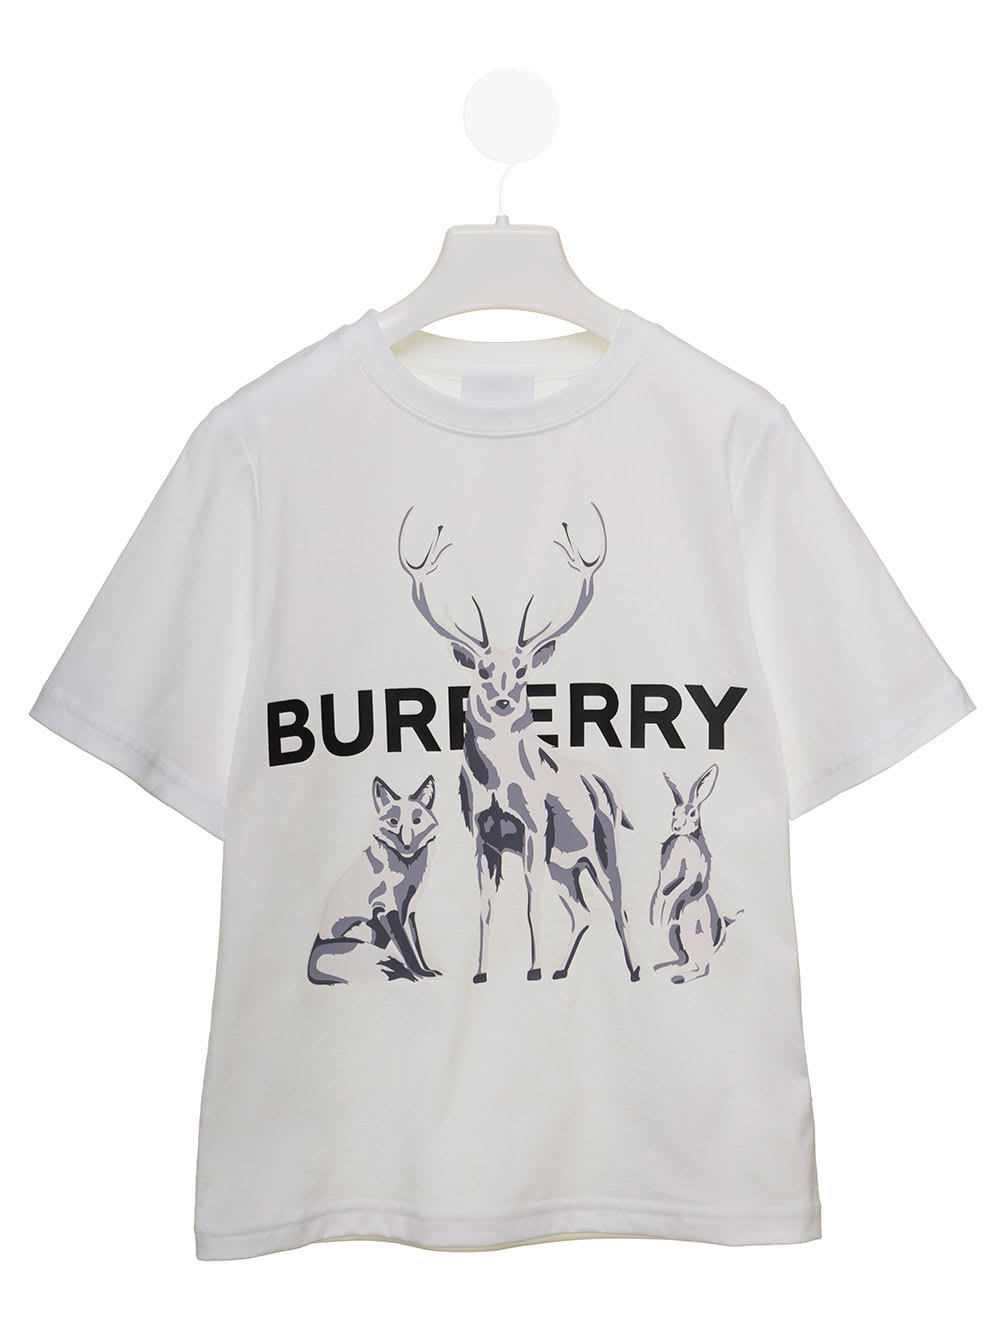 Burberry Kids Baby Boys White Printed T-shirt